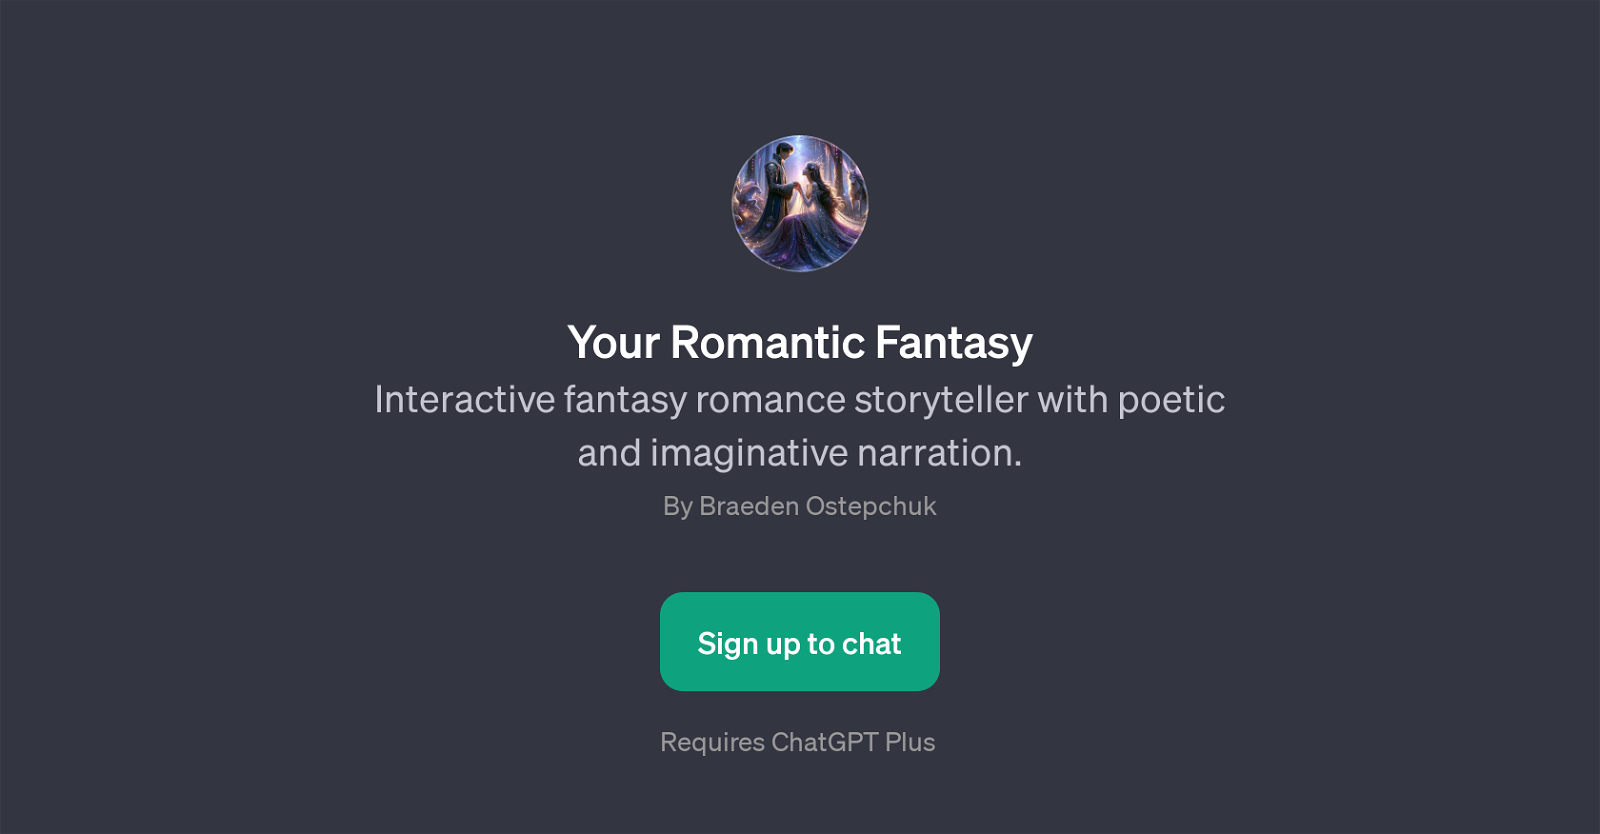 Your Romantic Fantasy website